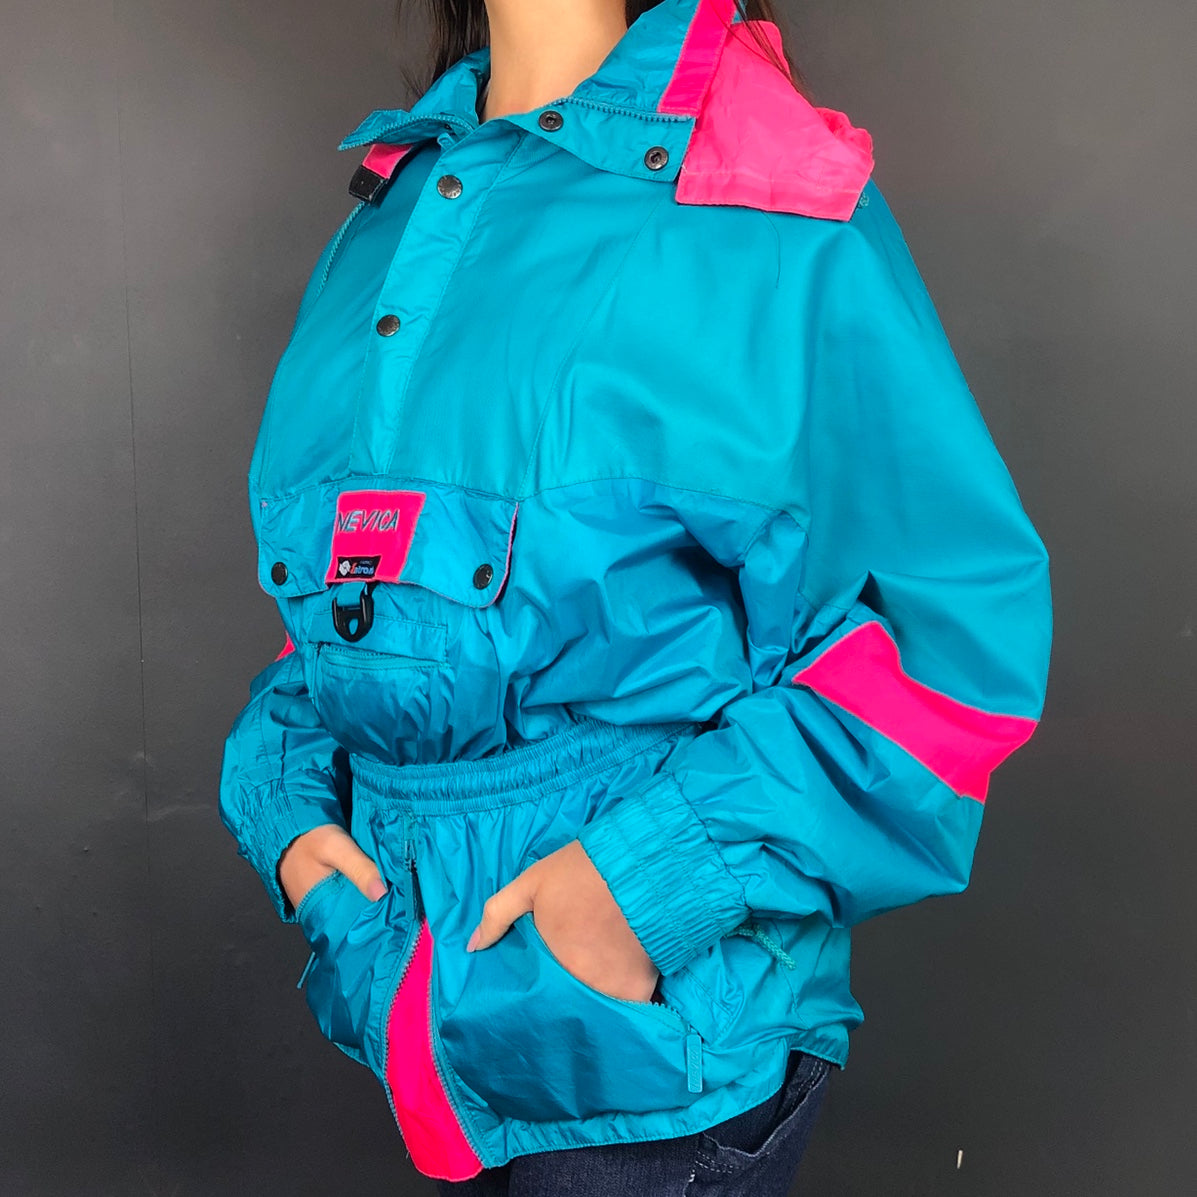 Vintage Nevica Ski Jacket in Teal and Hot Pink - Women's Large / Men's -  Vintique Clothing